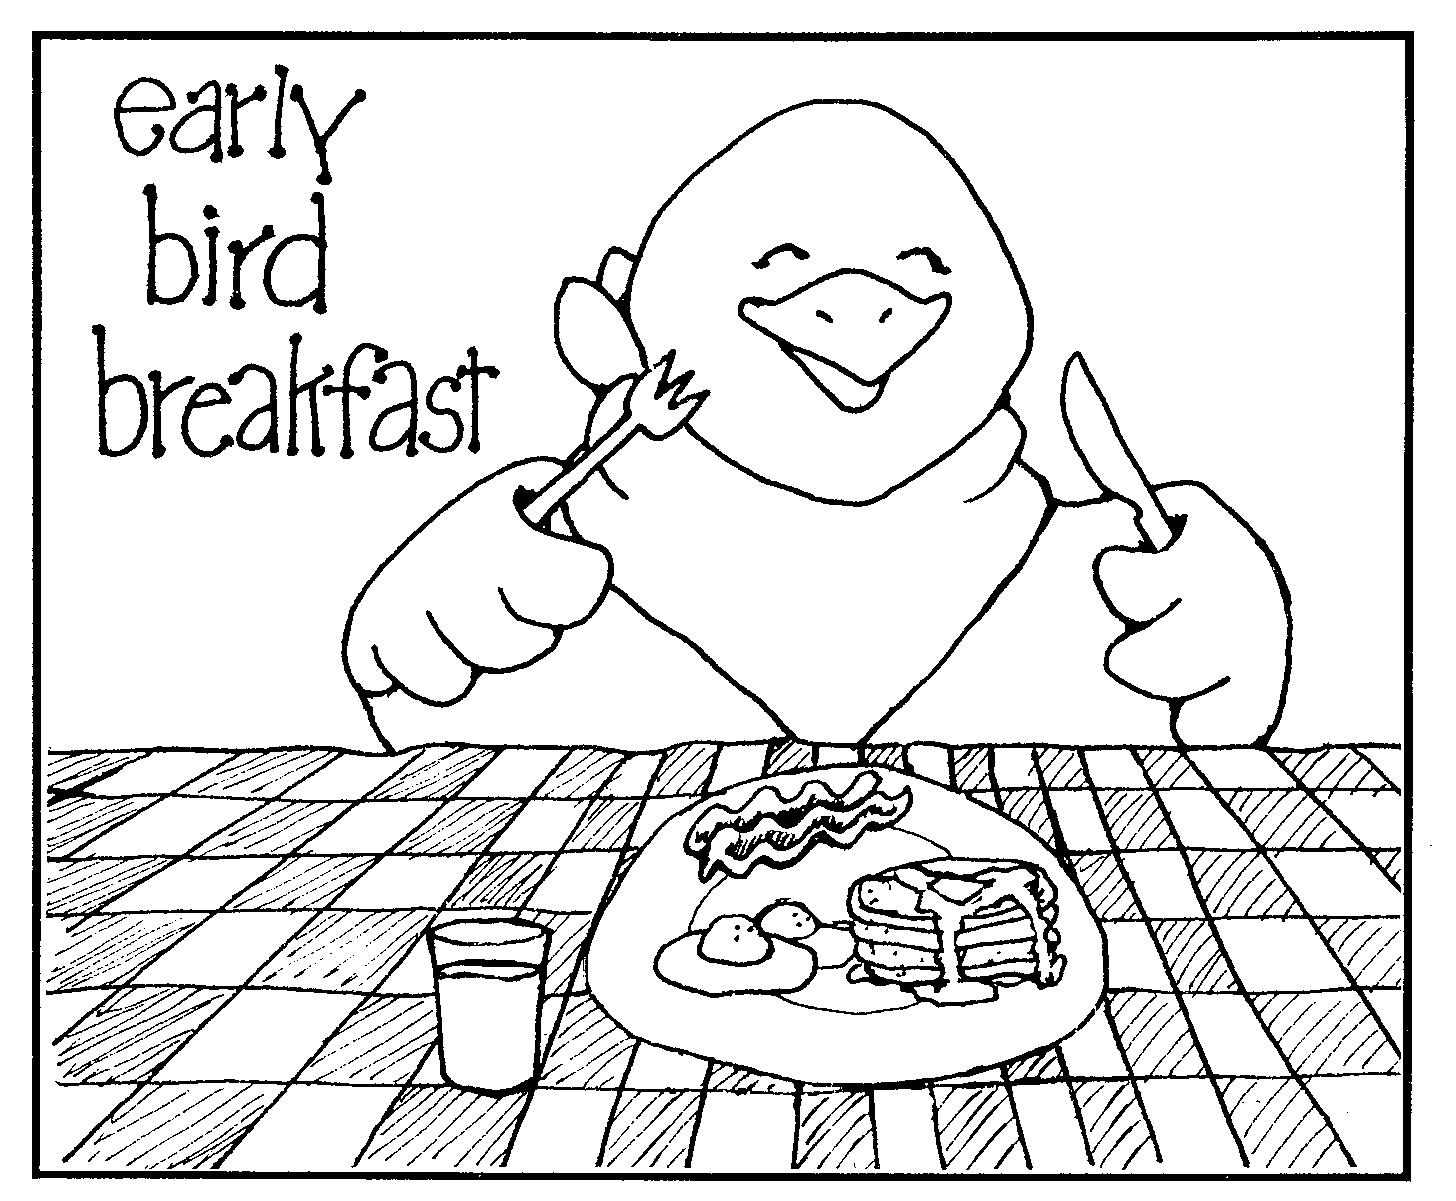 Cg Bird Eating Breakfast File Type Image Jpeg File Size 547 04 Kb 